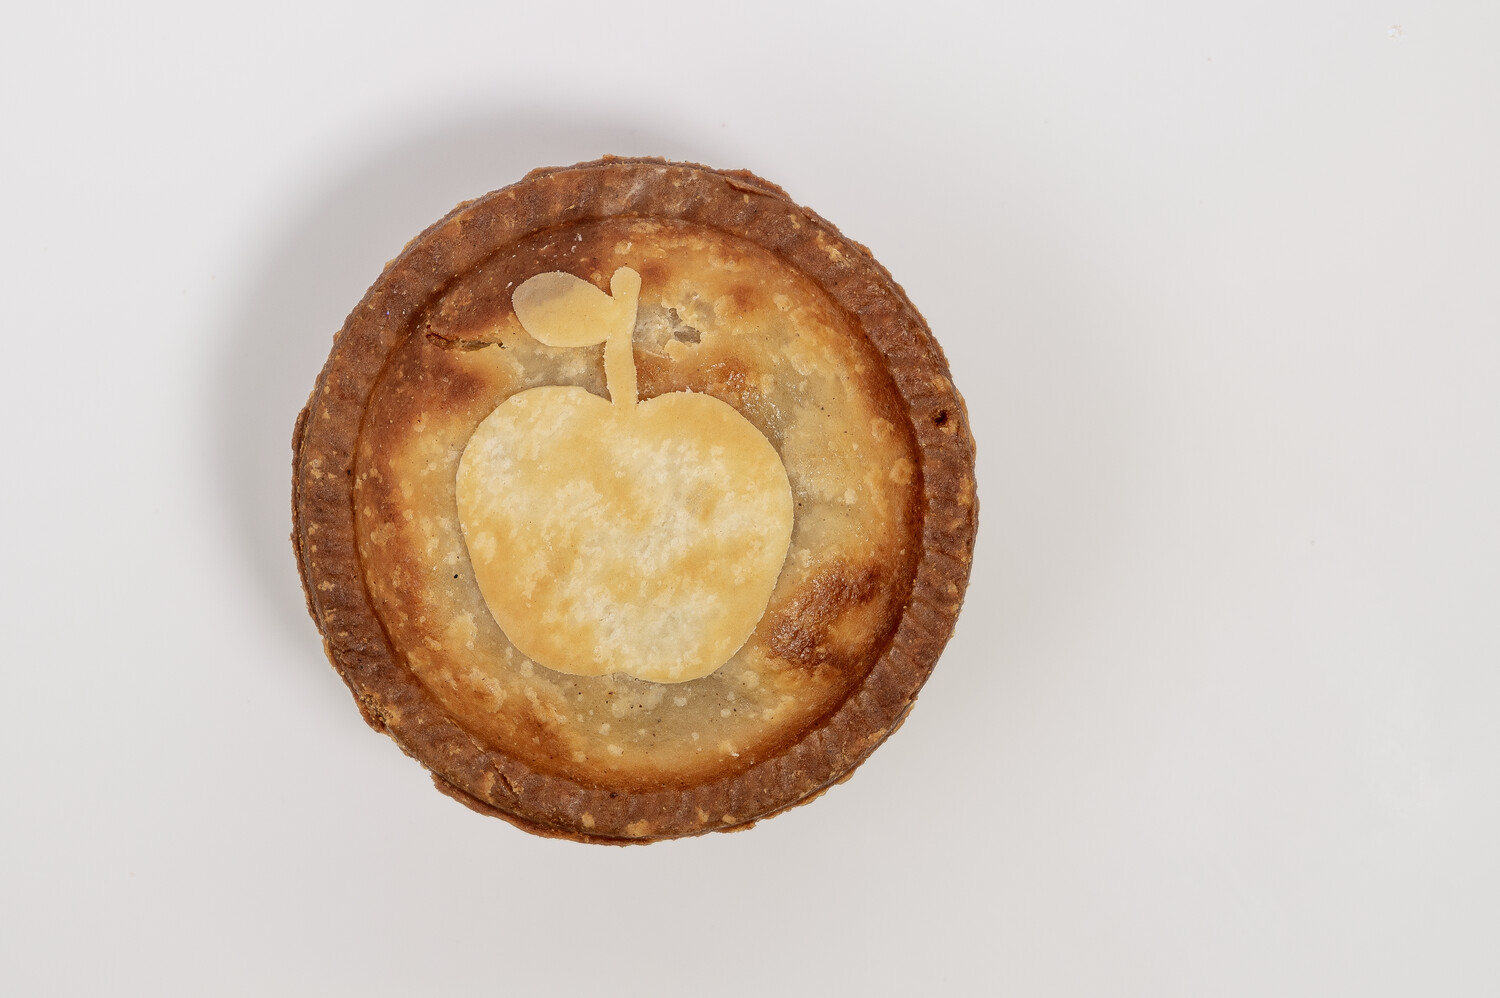 Gluten-free Caramel Apple Pie, frozen, 9oz, 1 serving